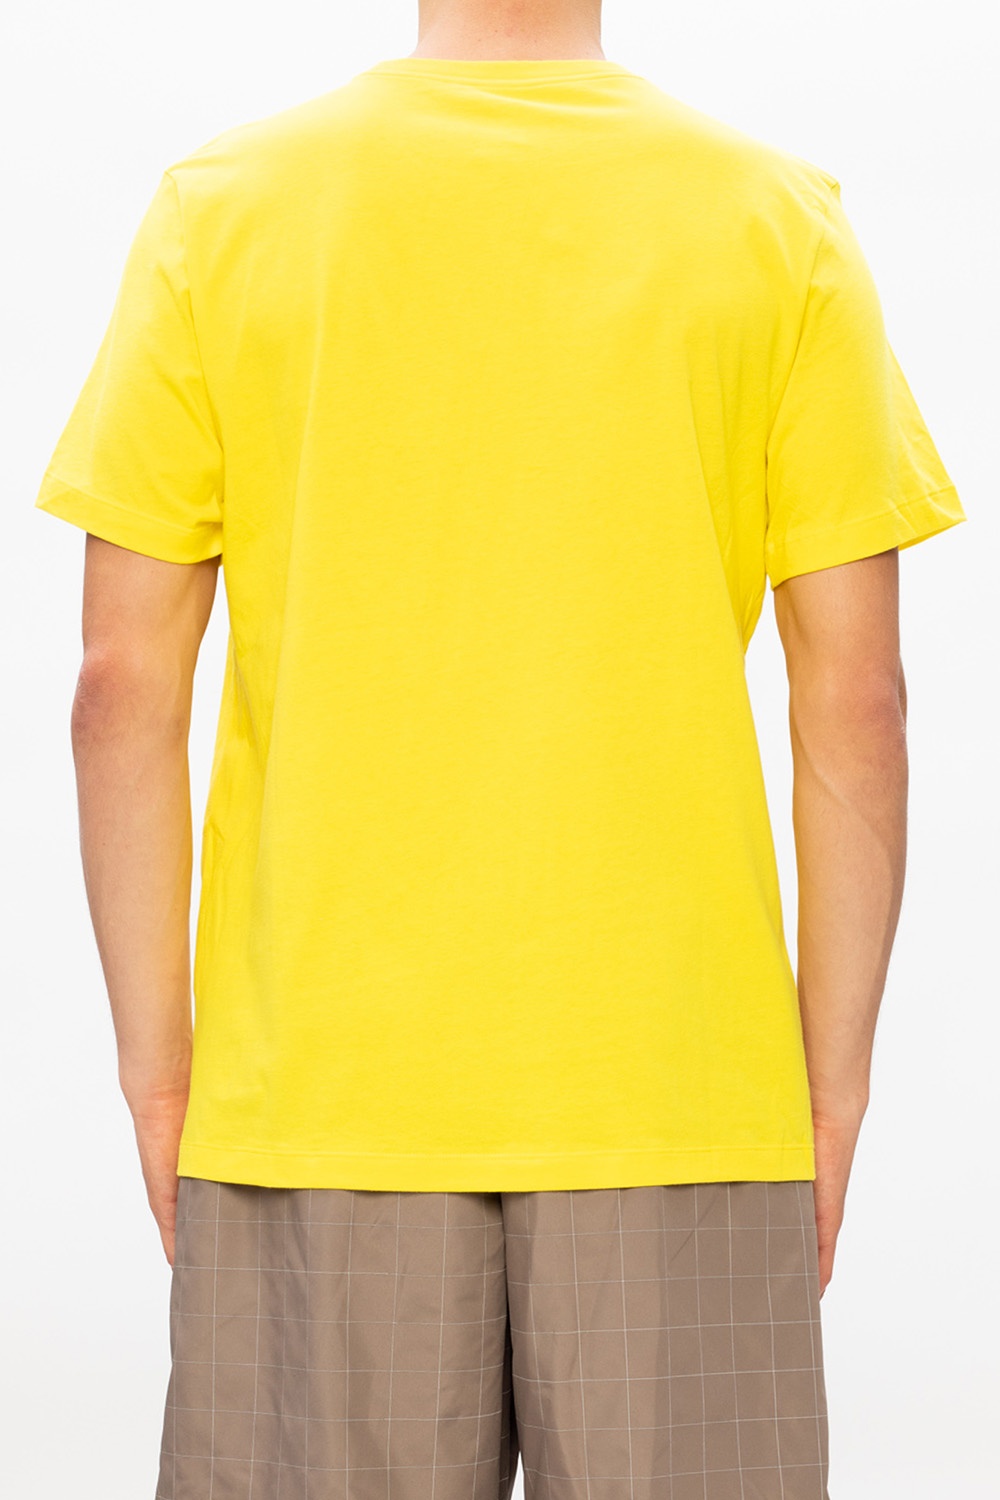 opti yellow shirts